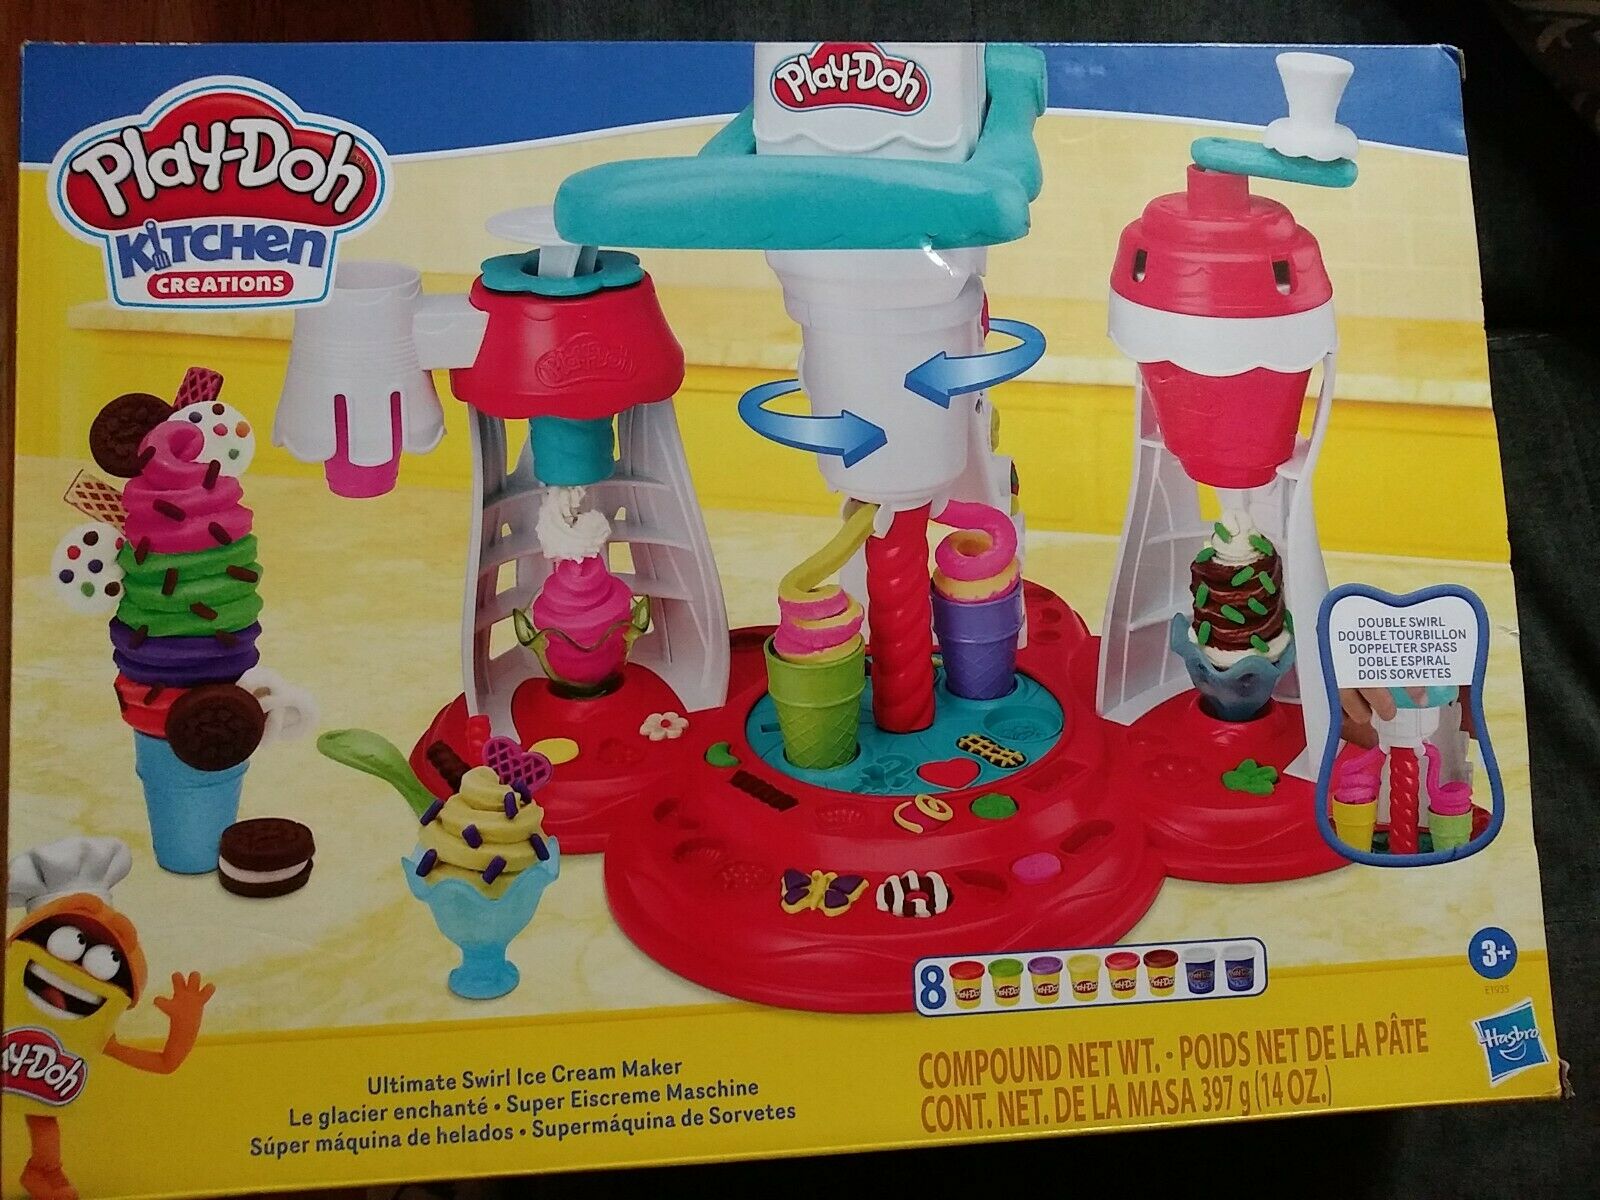 Play-doh Kitchen Creations Ultimate Swirl Ice Cream Maker, Multi-colour